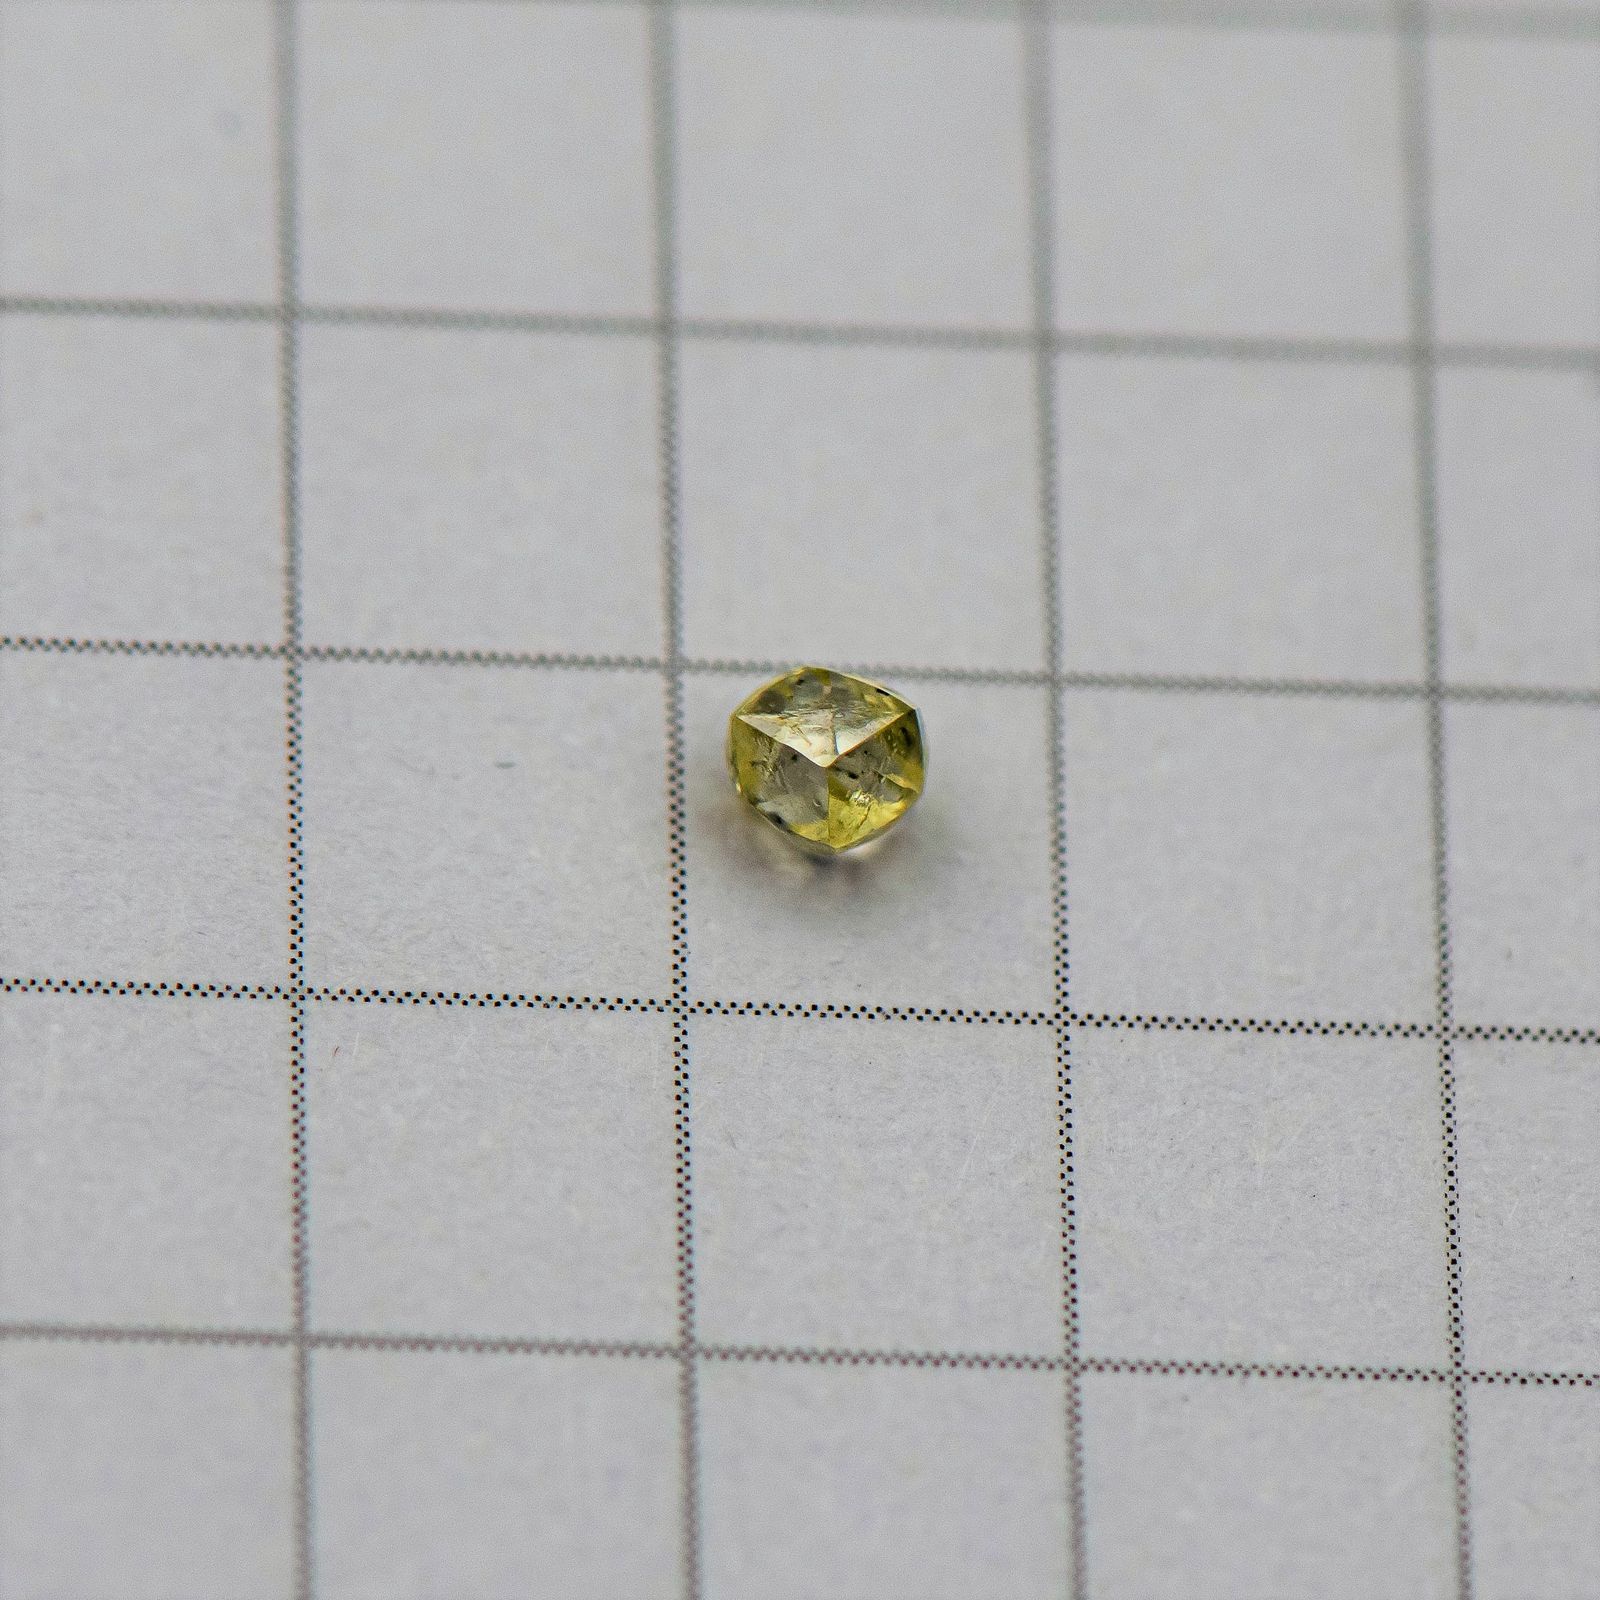 Алмаз Кристалл желтый 0,14 карат